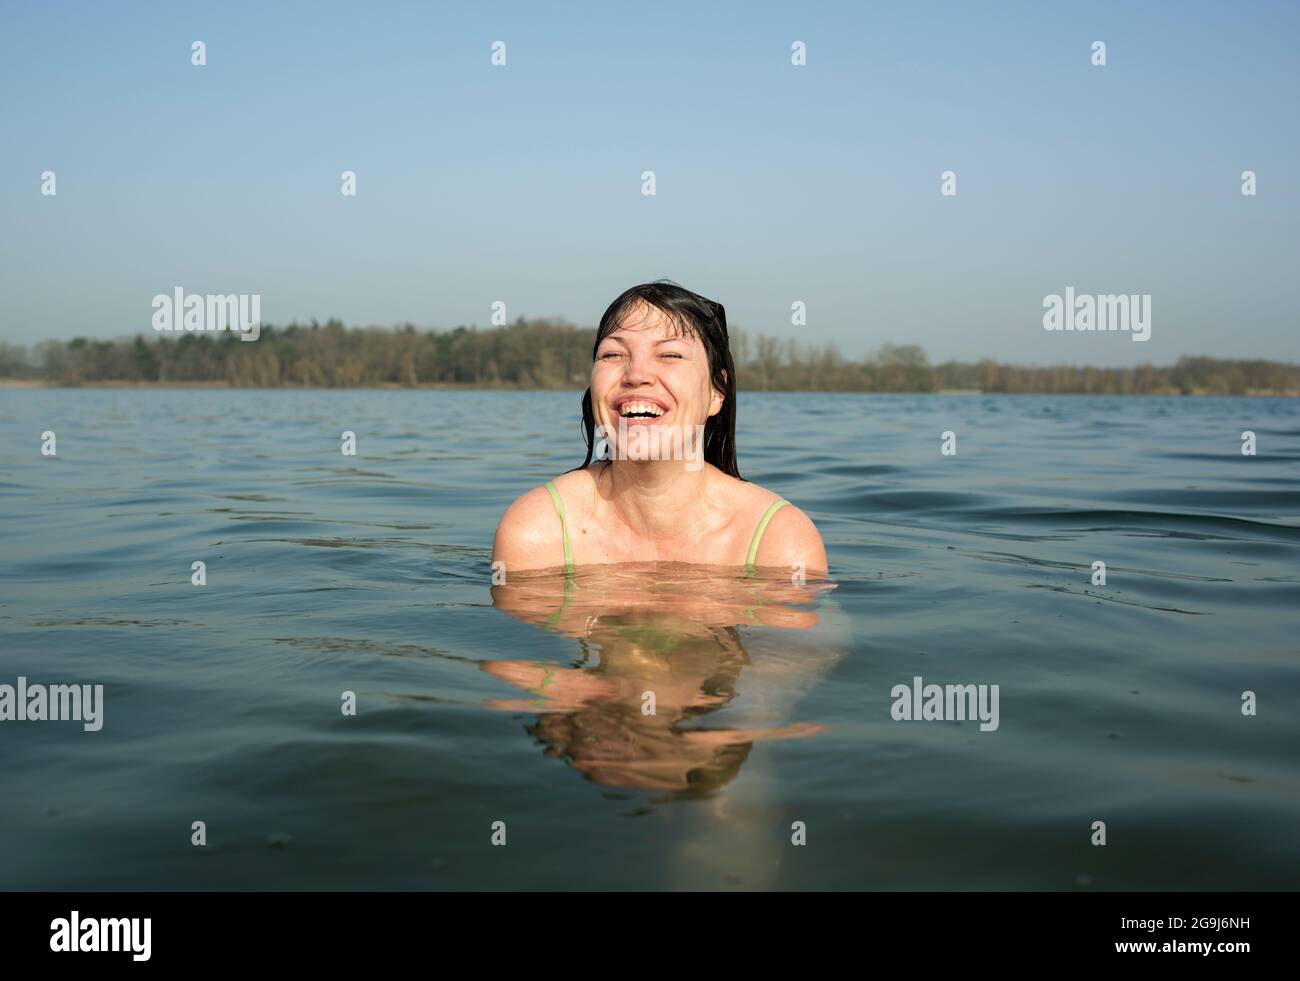 Netherlands, Noord-Brabant, Breda, Woman laughing in lake Stock Photo